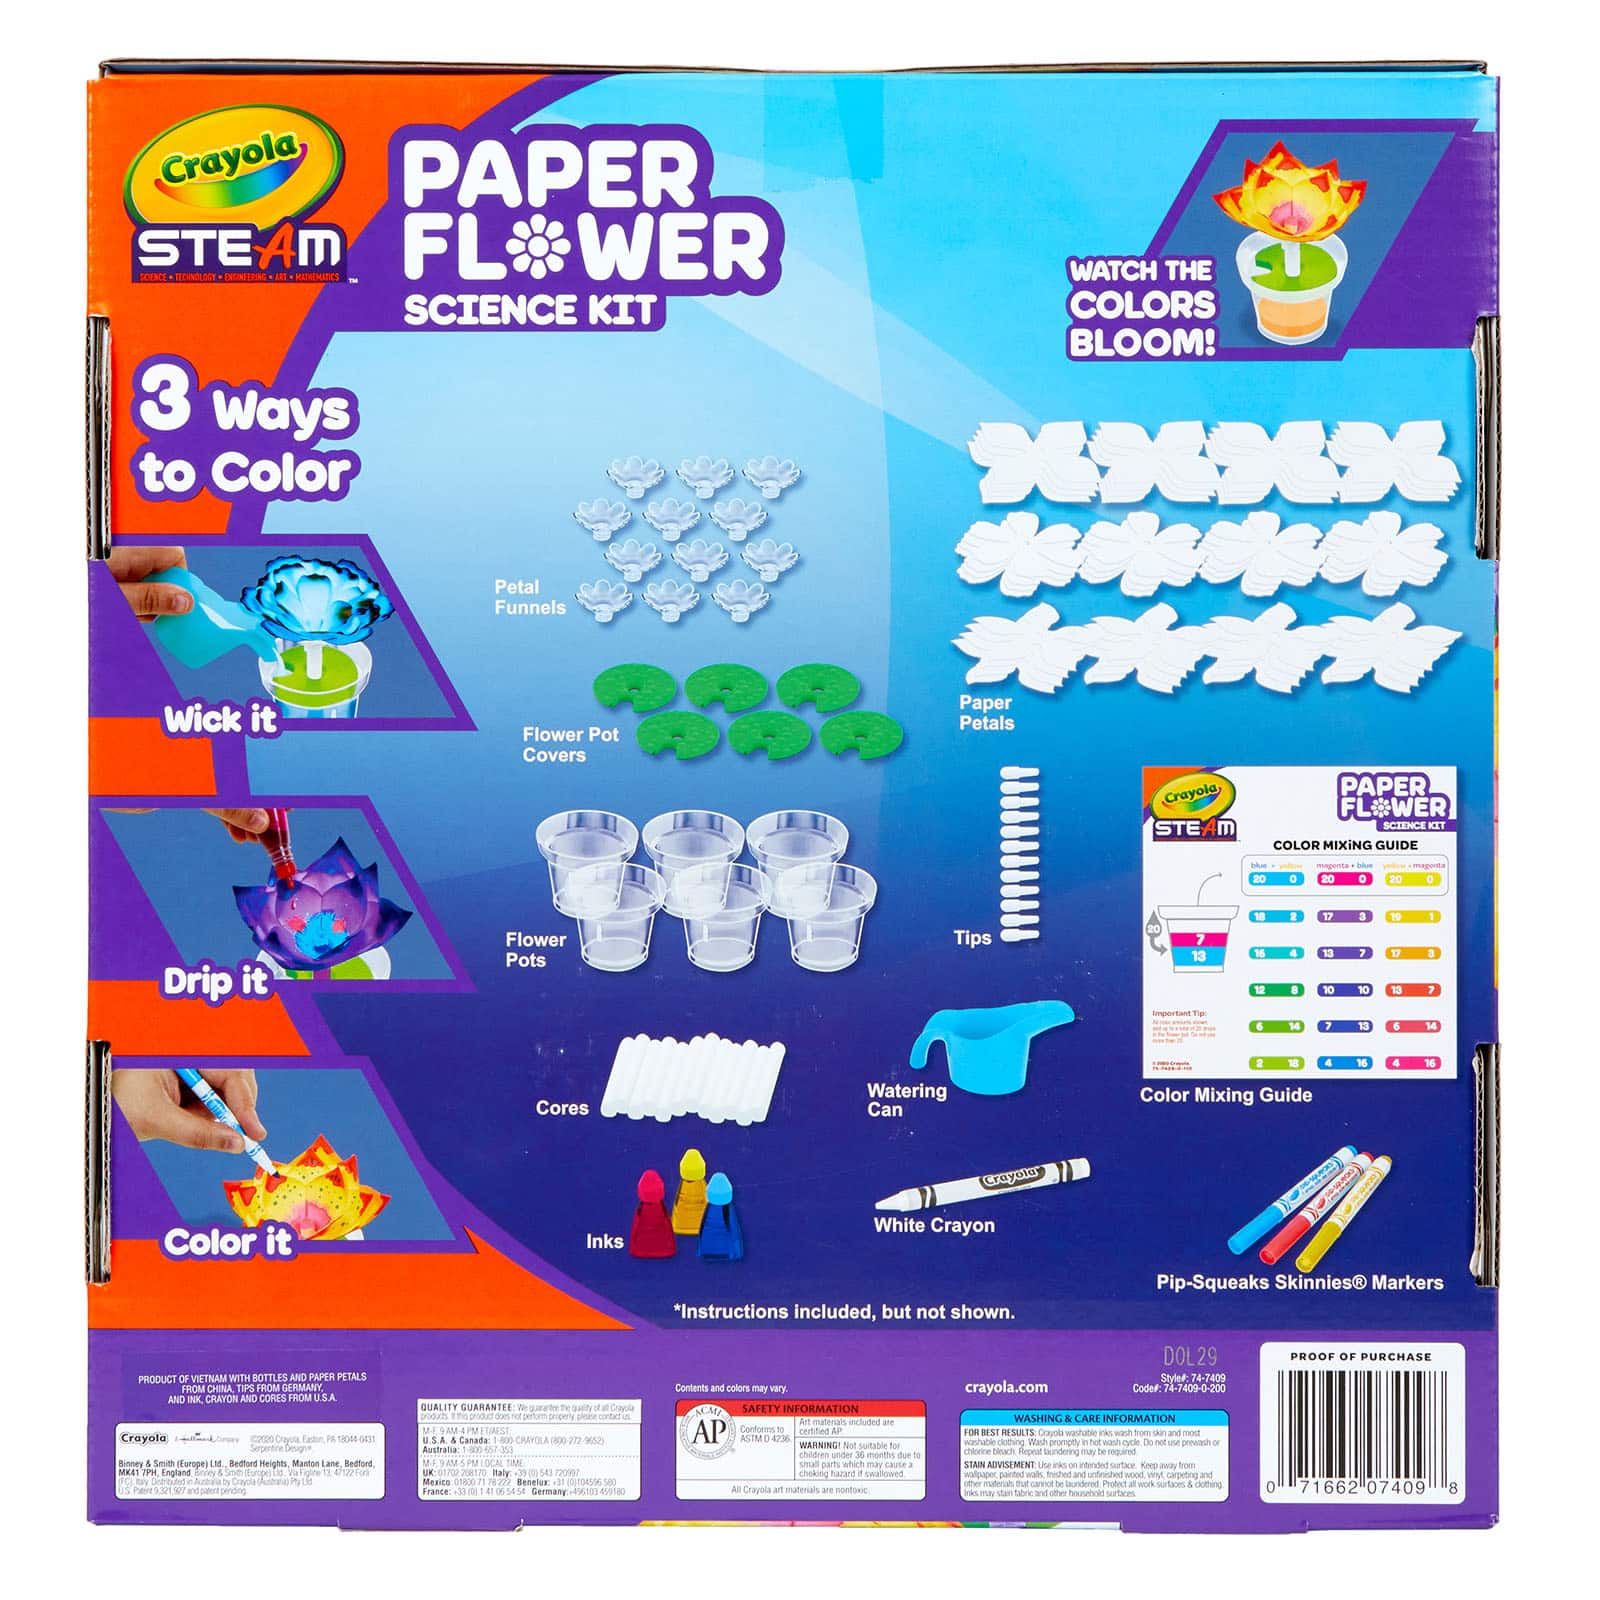 Crayola&#xAE; STEAM Paper Flower Science Kit